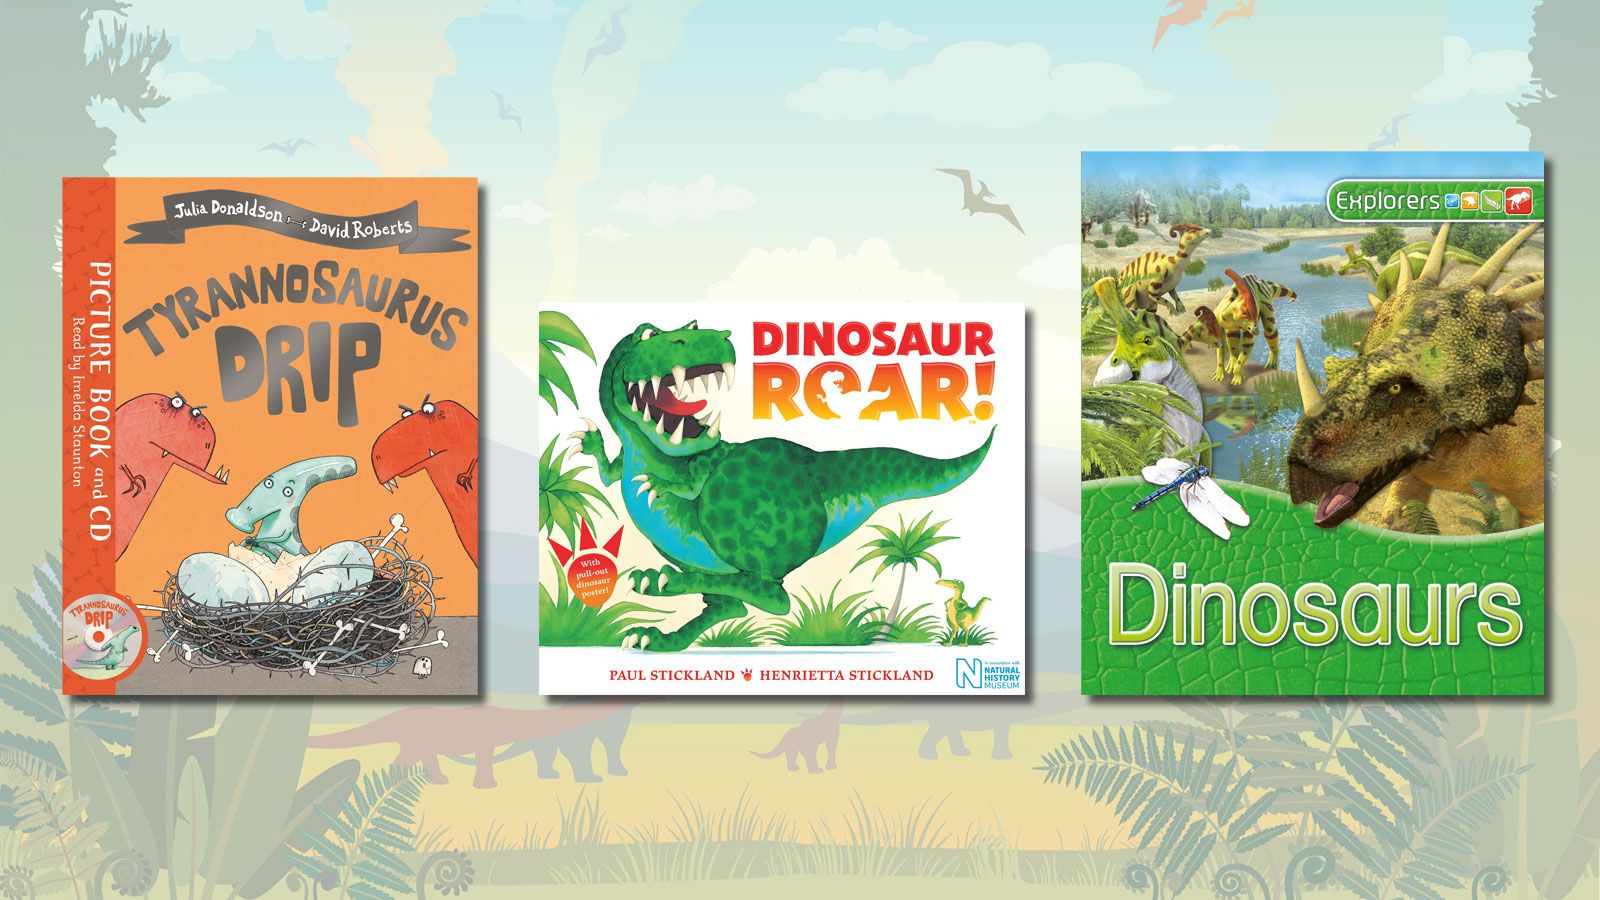 Book covers of Tyrannosaurus Drip, Dinosaur Roar! and Explorers: Dinosaurs